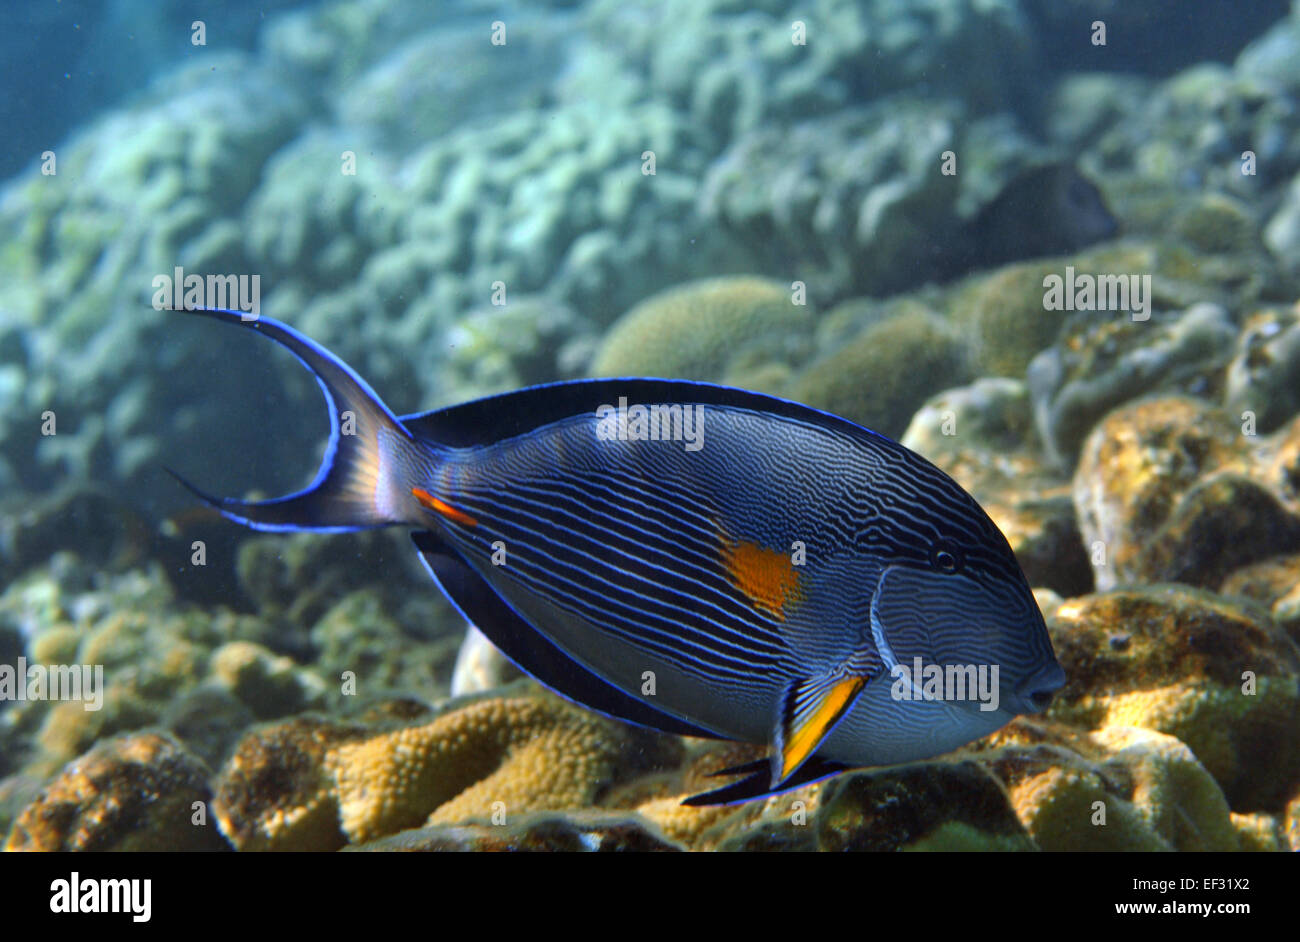 https://c8.alamy.com/comp/EF31X2/sohal-surgeonfish-or-red-sea-clown-tang-acanthurus-sohal-eilat-red-EF31X2.jpg